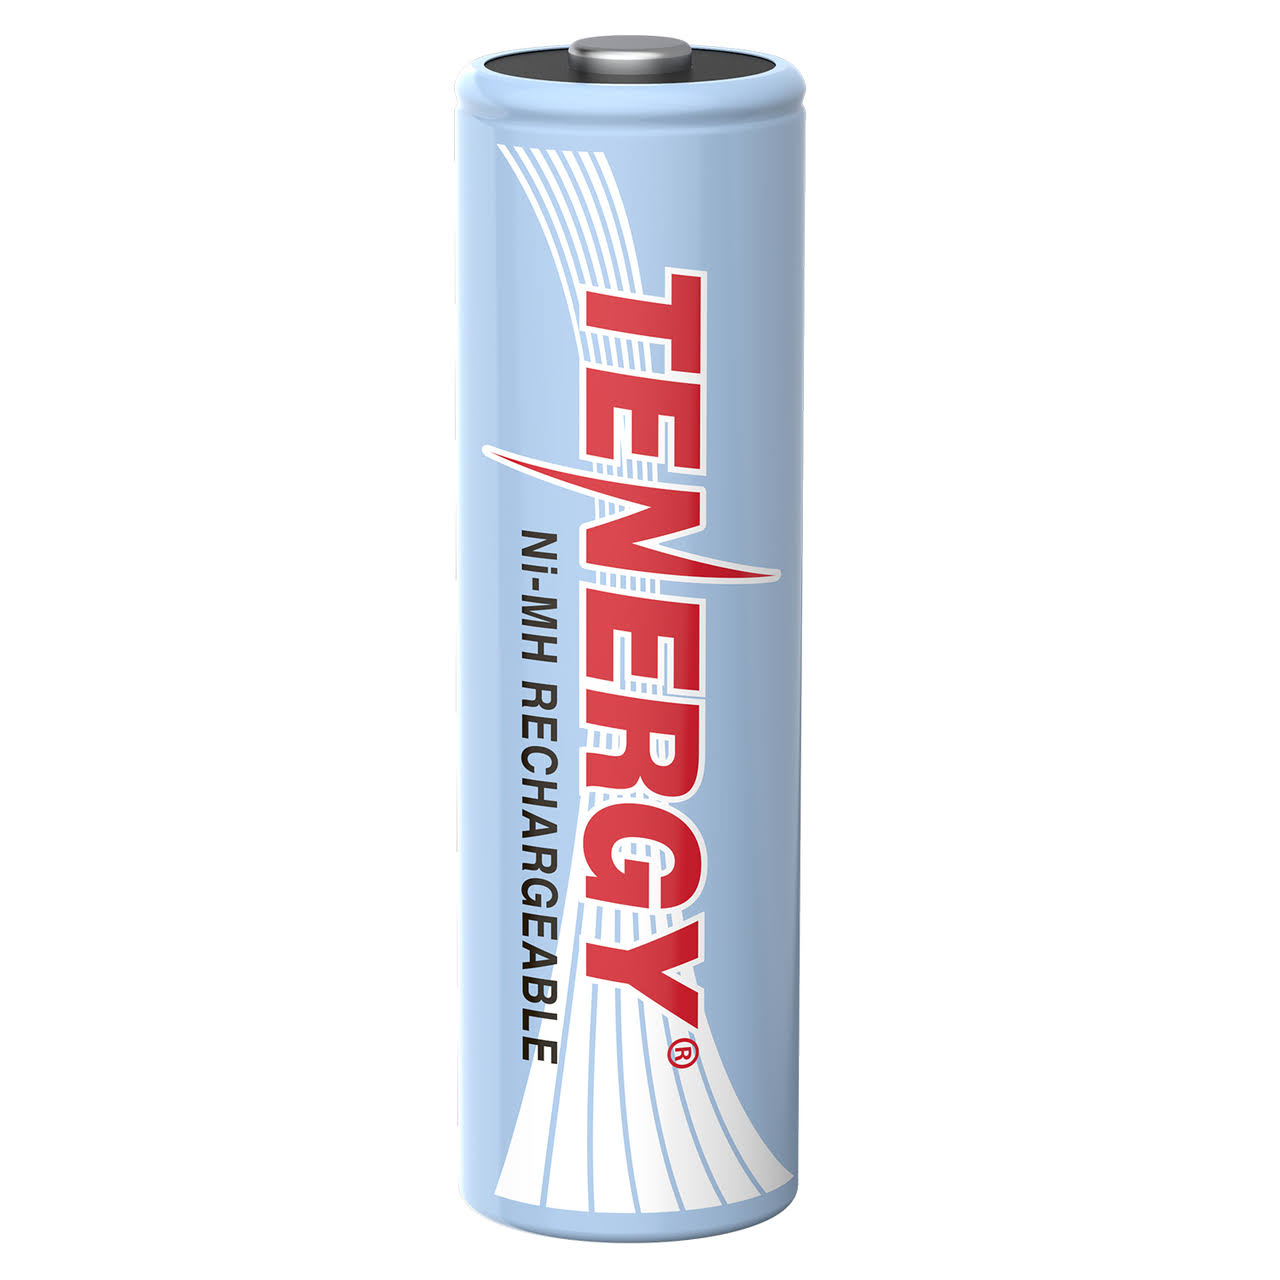 Tenergy AA 2600mAh NiMH Rechargeable Battery